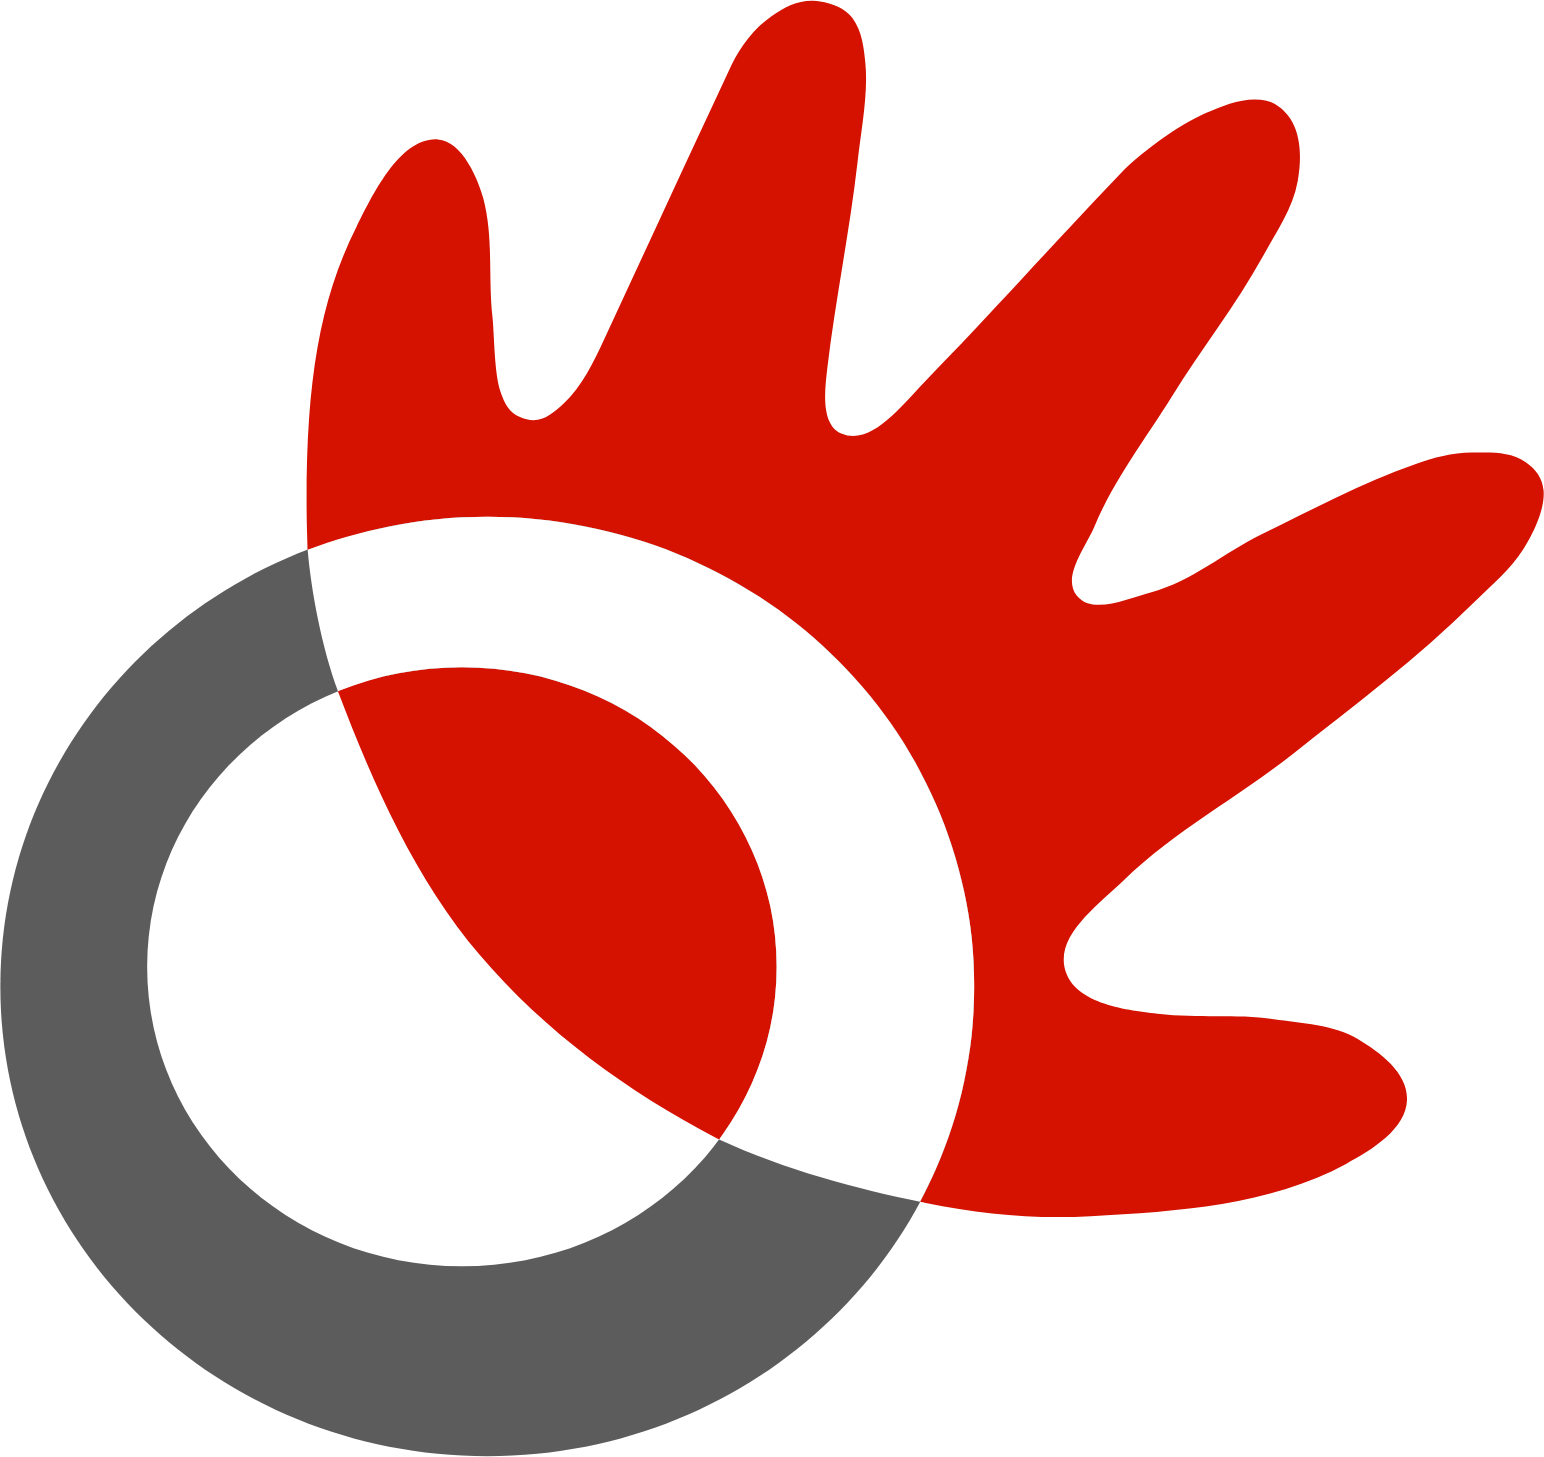 Telkom Indonesia logo (PNG transparent)